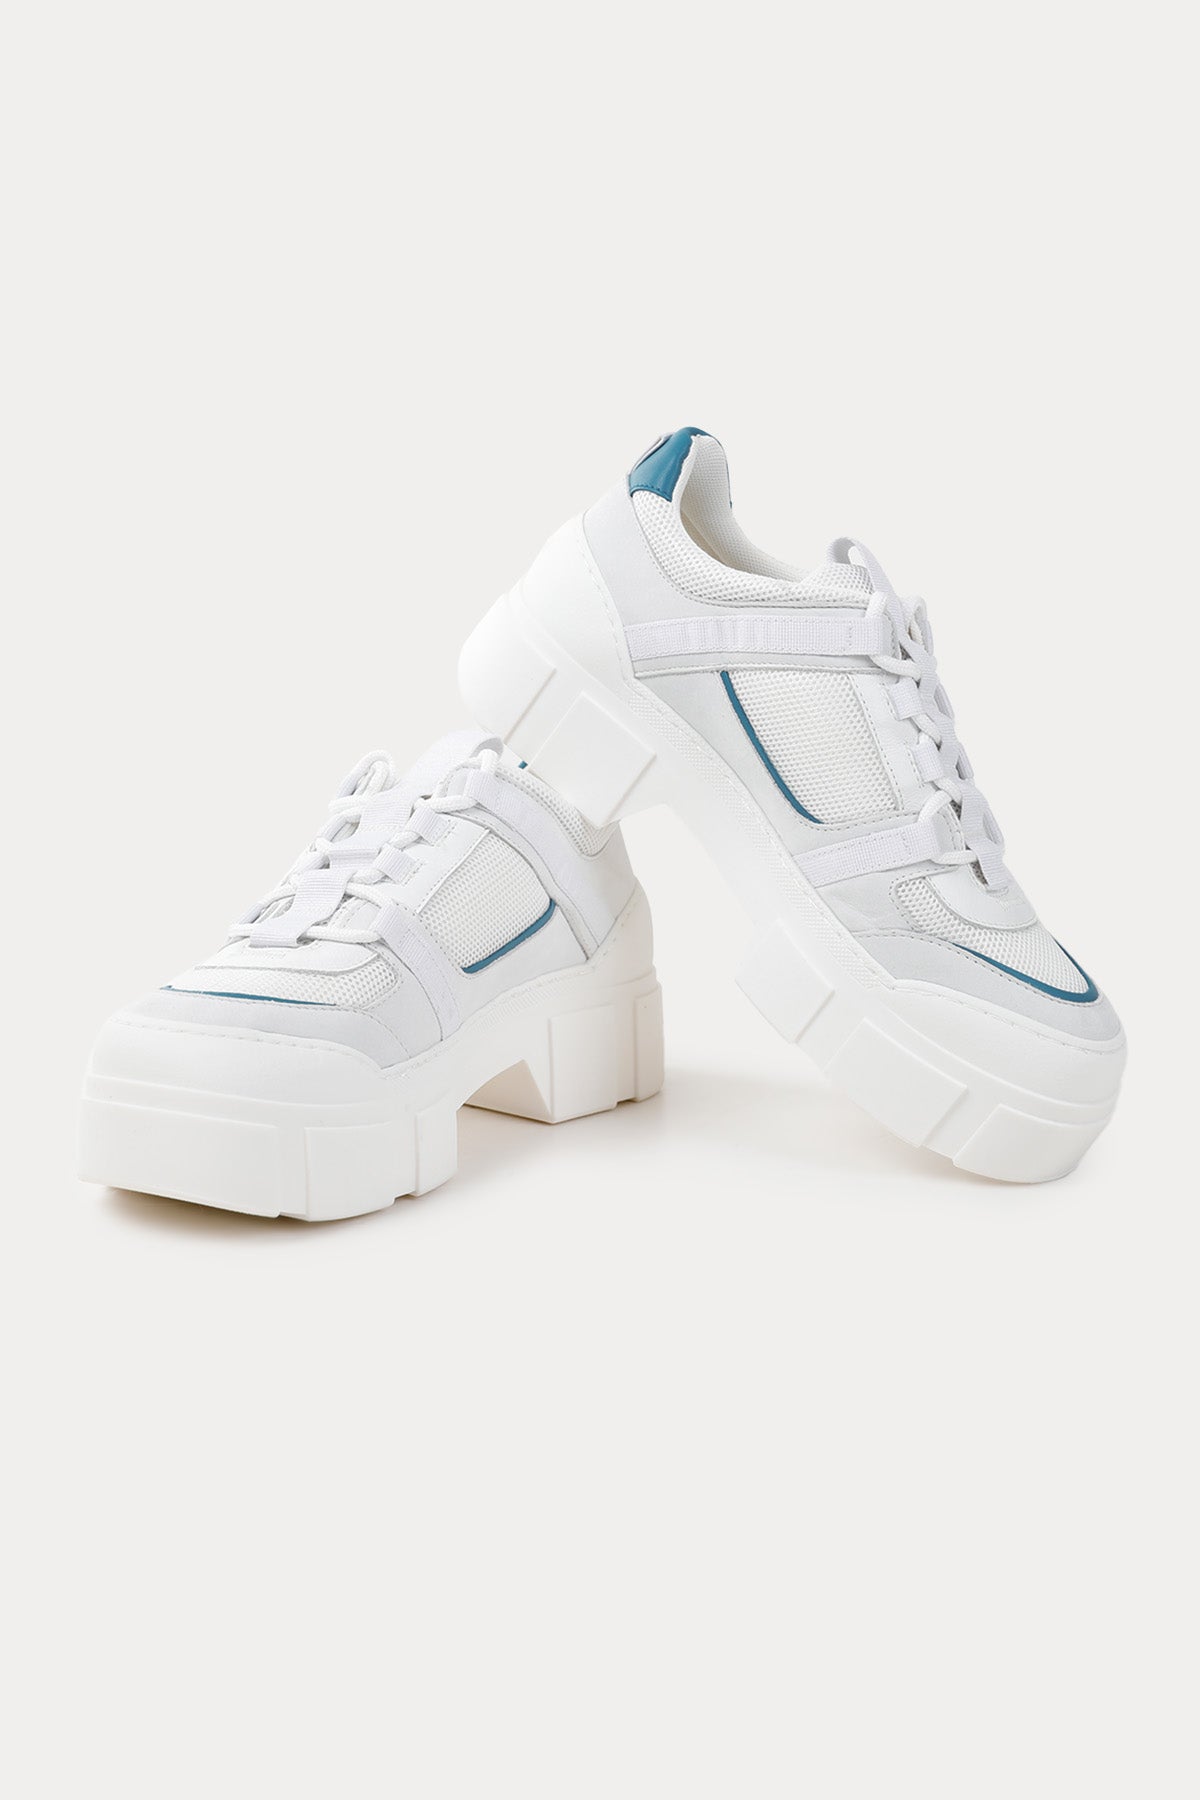 Vic Matie Fileli Deri Sneaker Ayakkabı